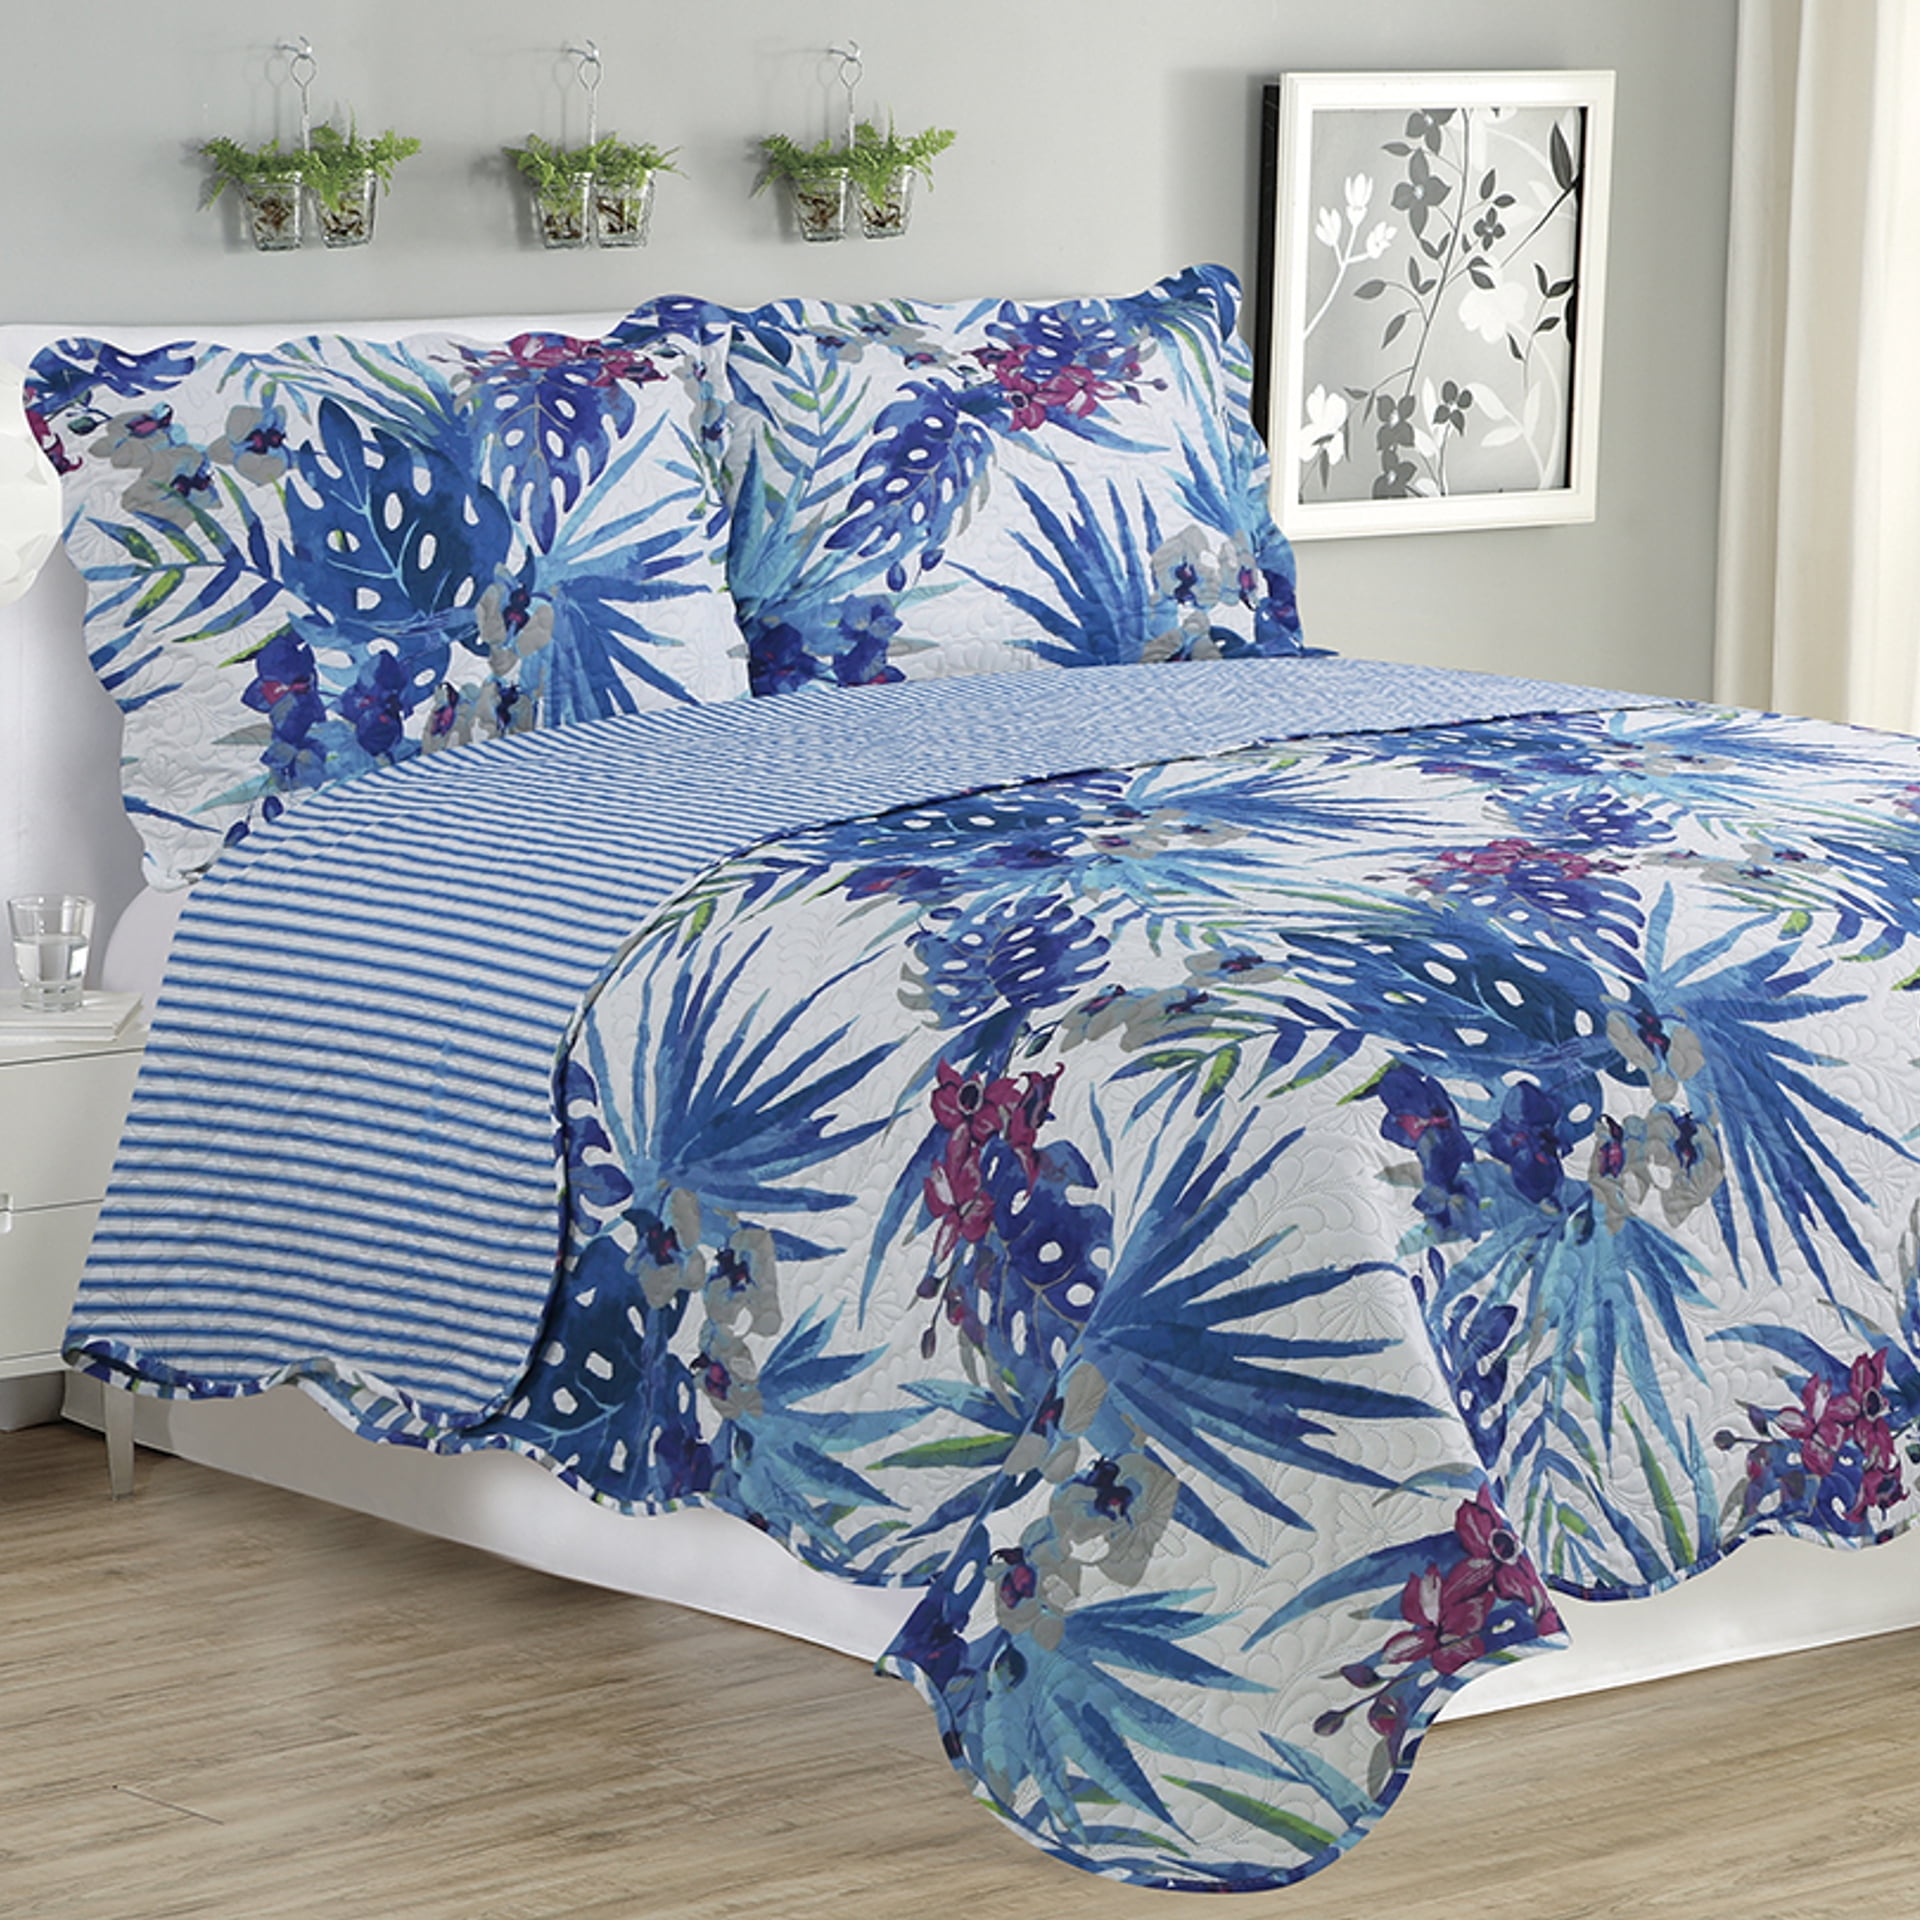 Details about   Flower Birds Printed Quilted Bedspread Set Home  Bedspread Set Pillow shams 3pcs 